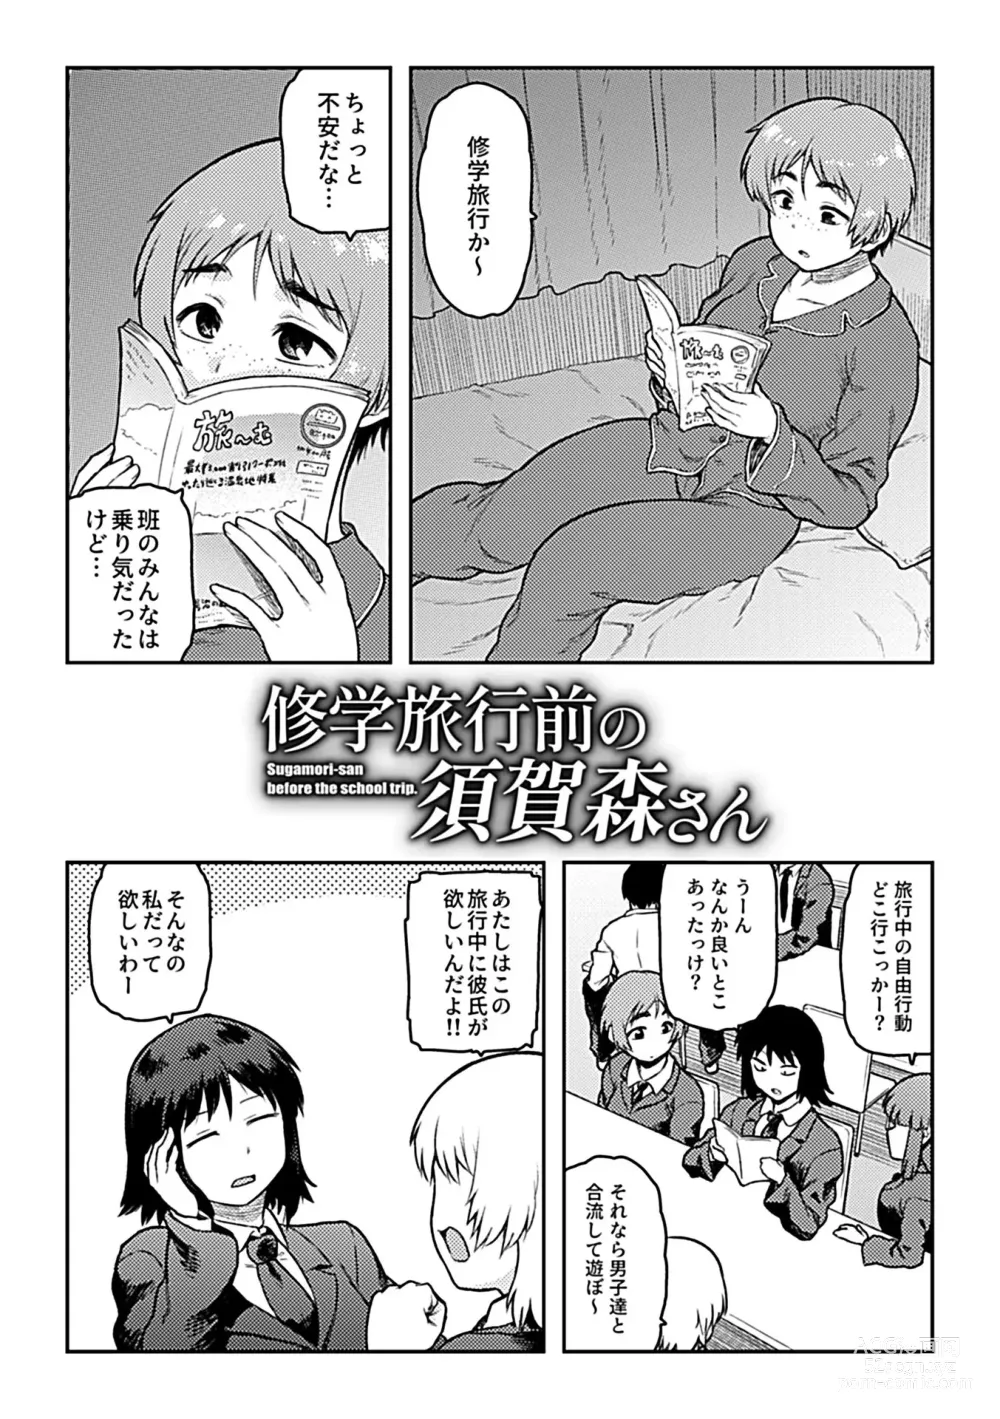 Page 197 of manga Aibiki